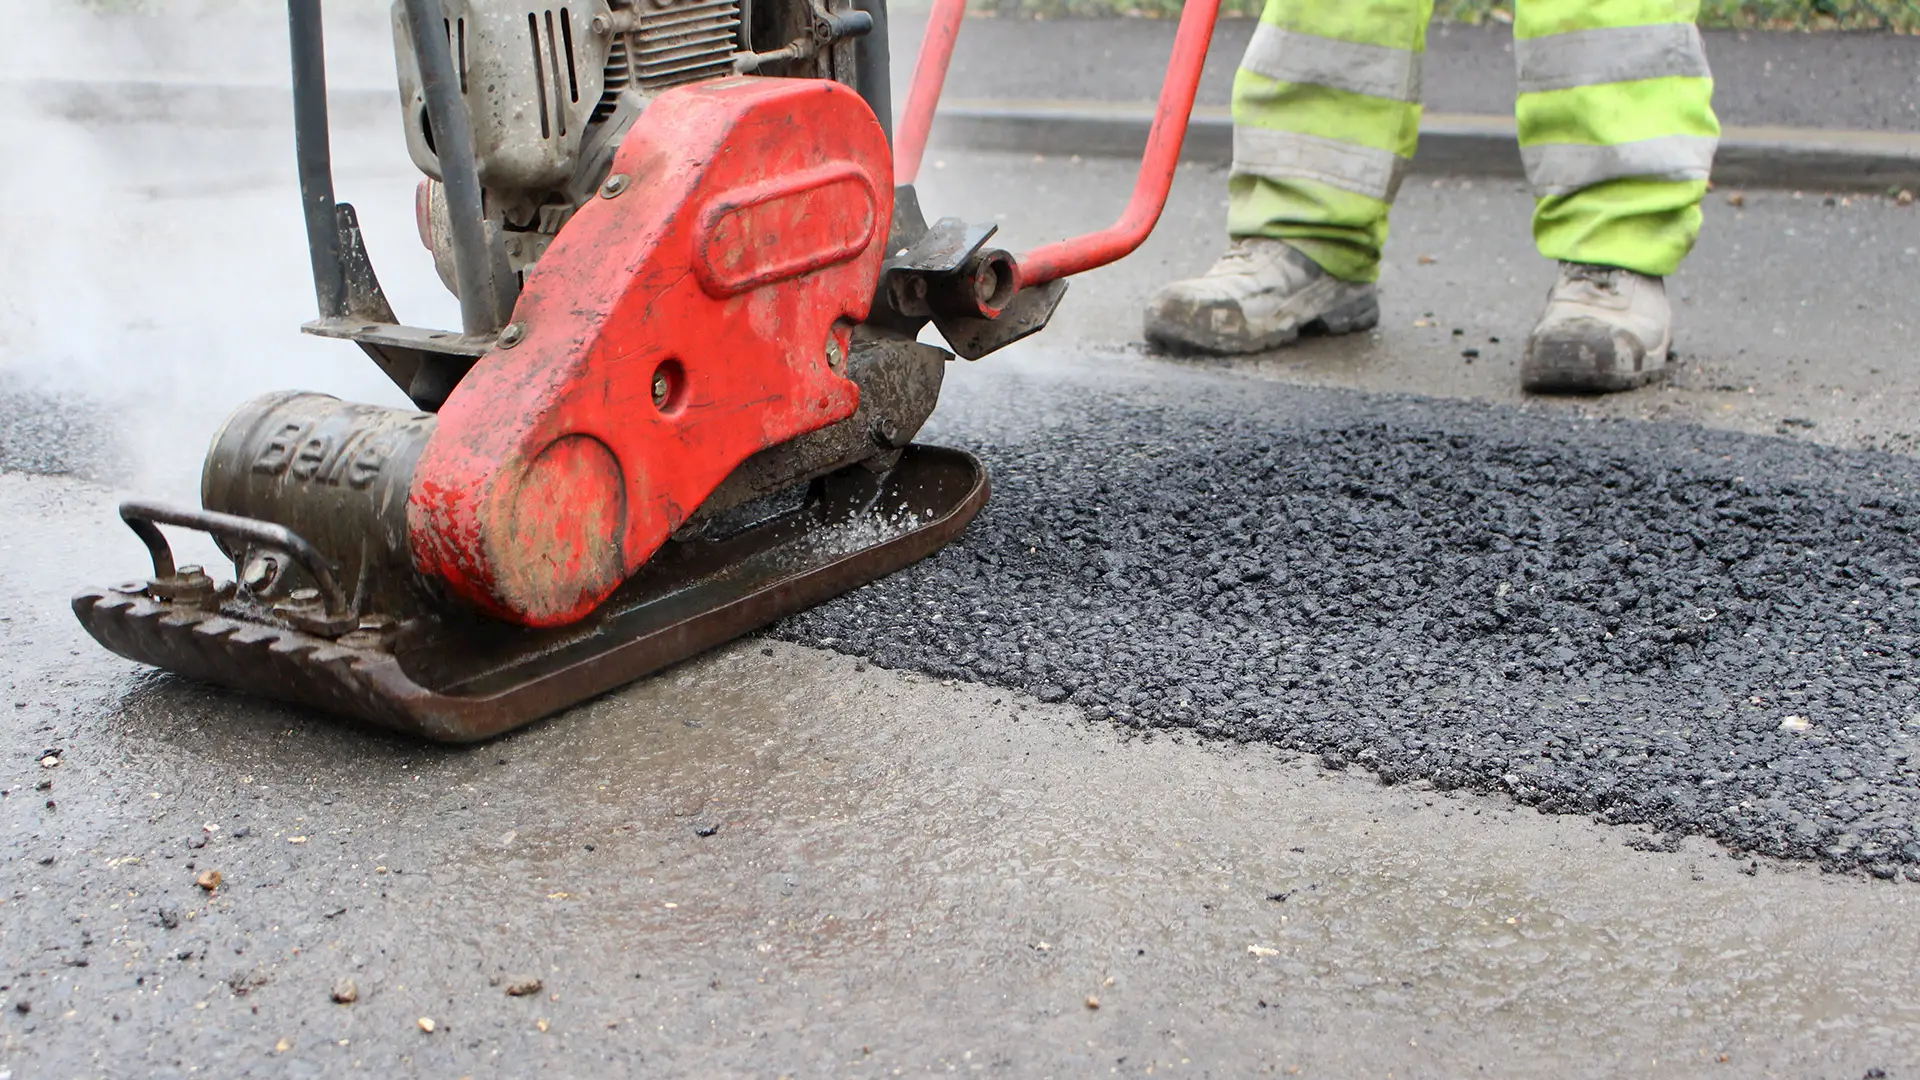 Experienced pothole repair contractors in Lichfield